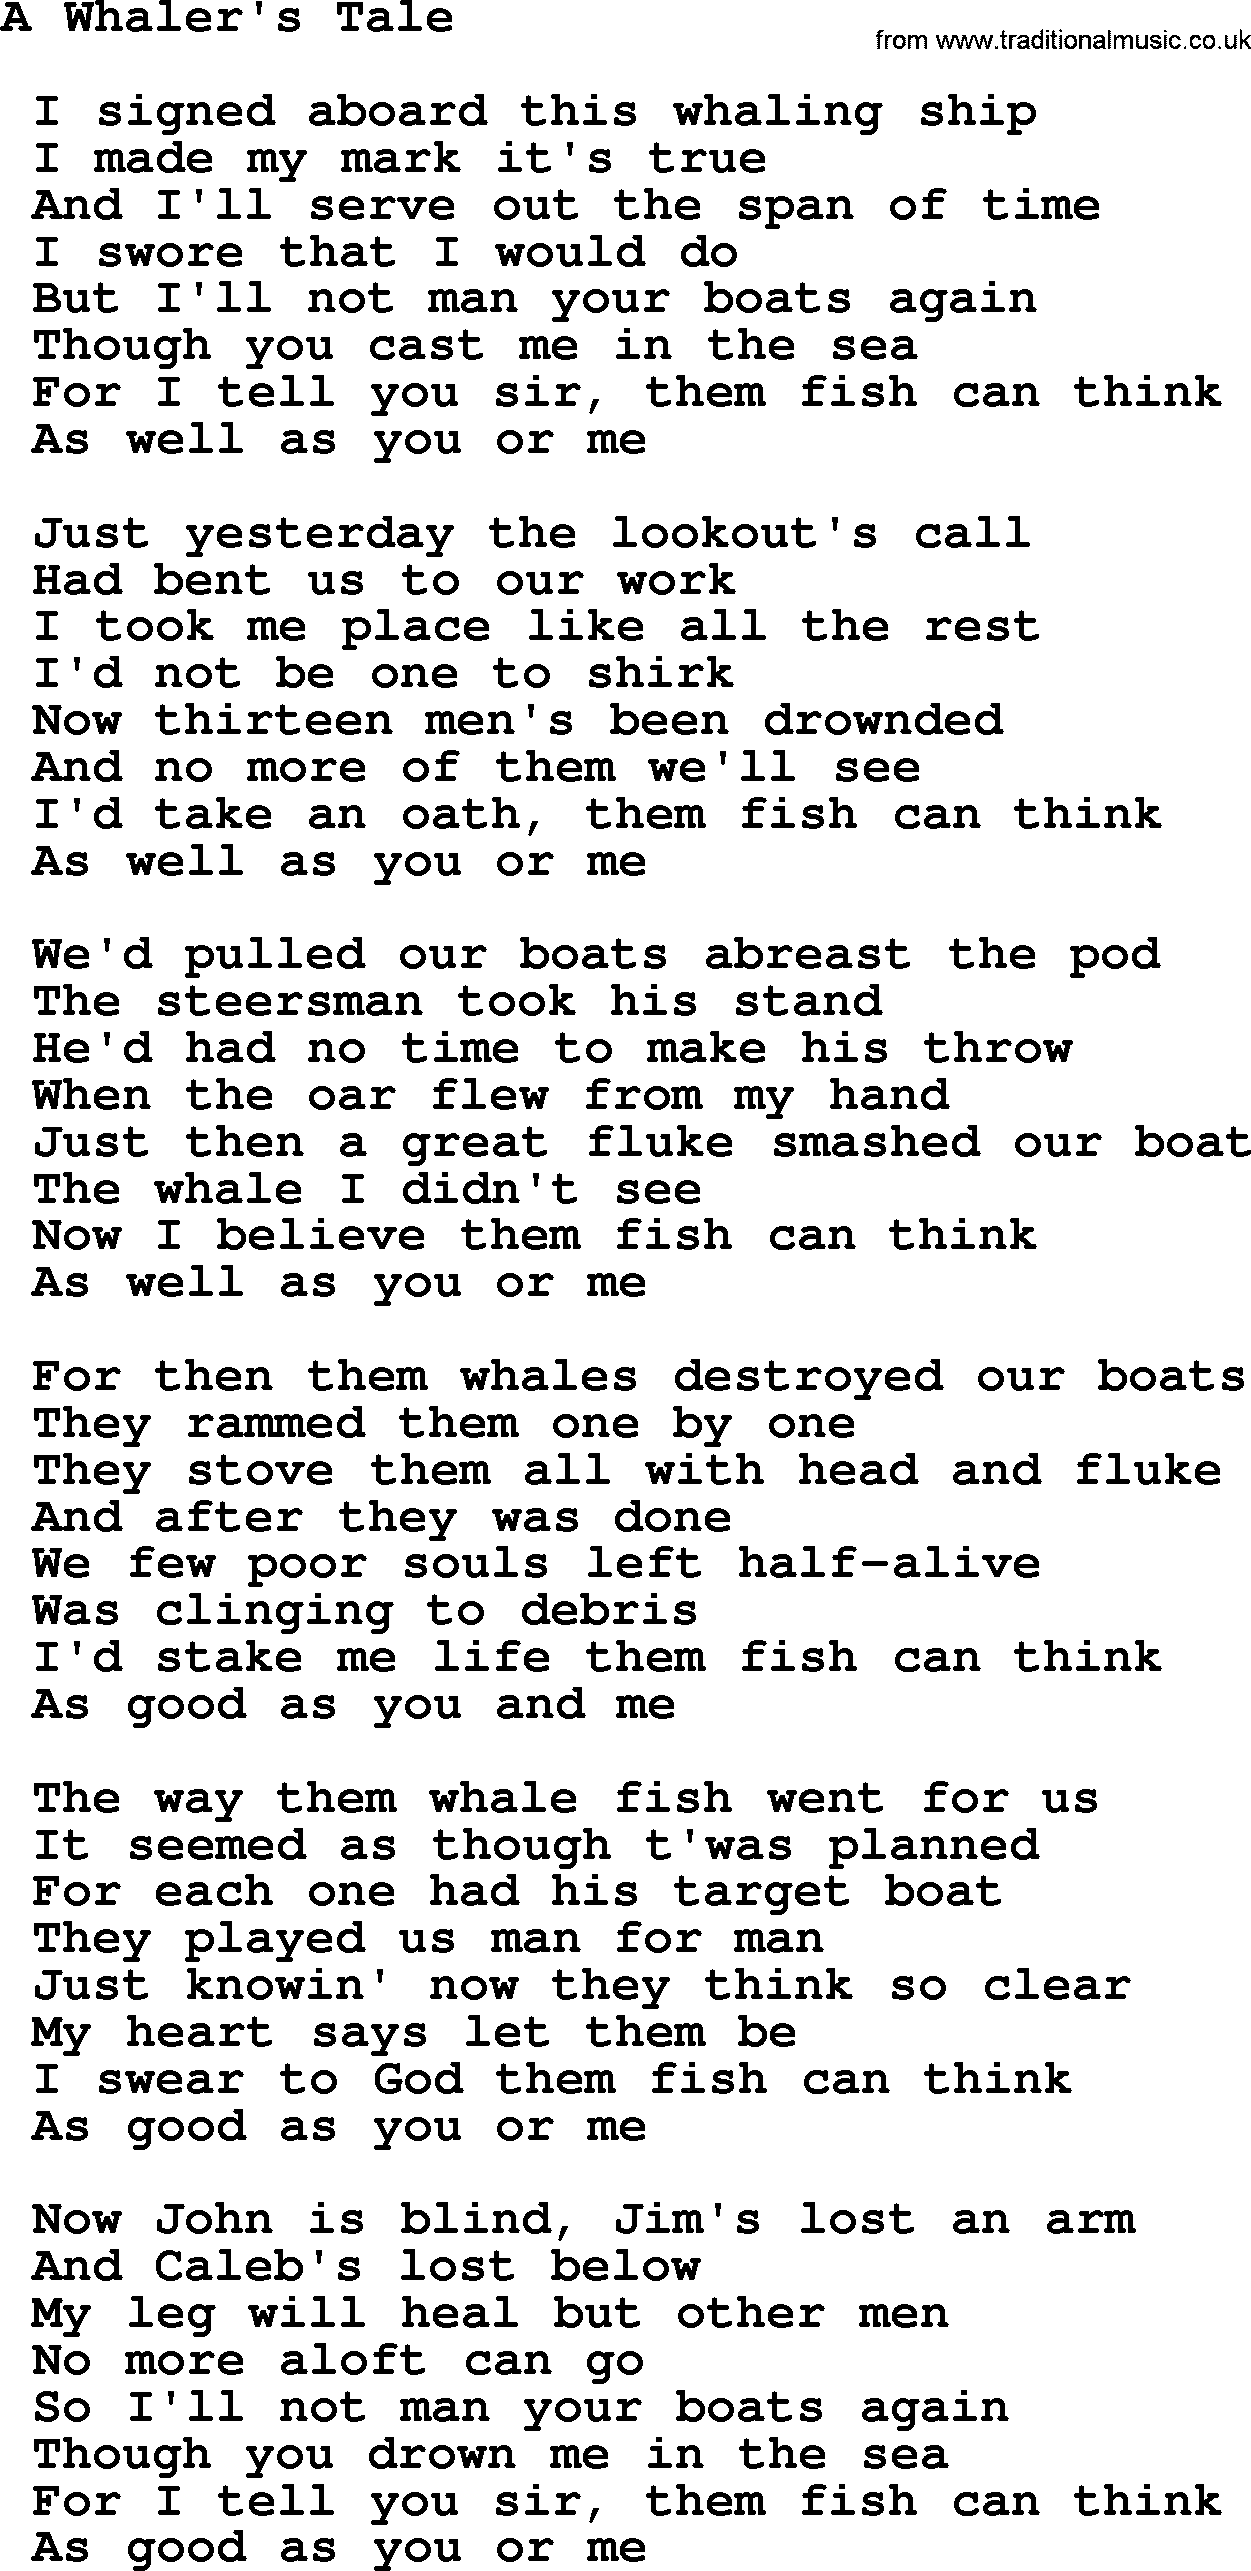 Sea Song or Shantie: A Whalers Tale, lyrics